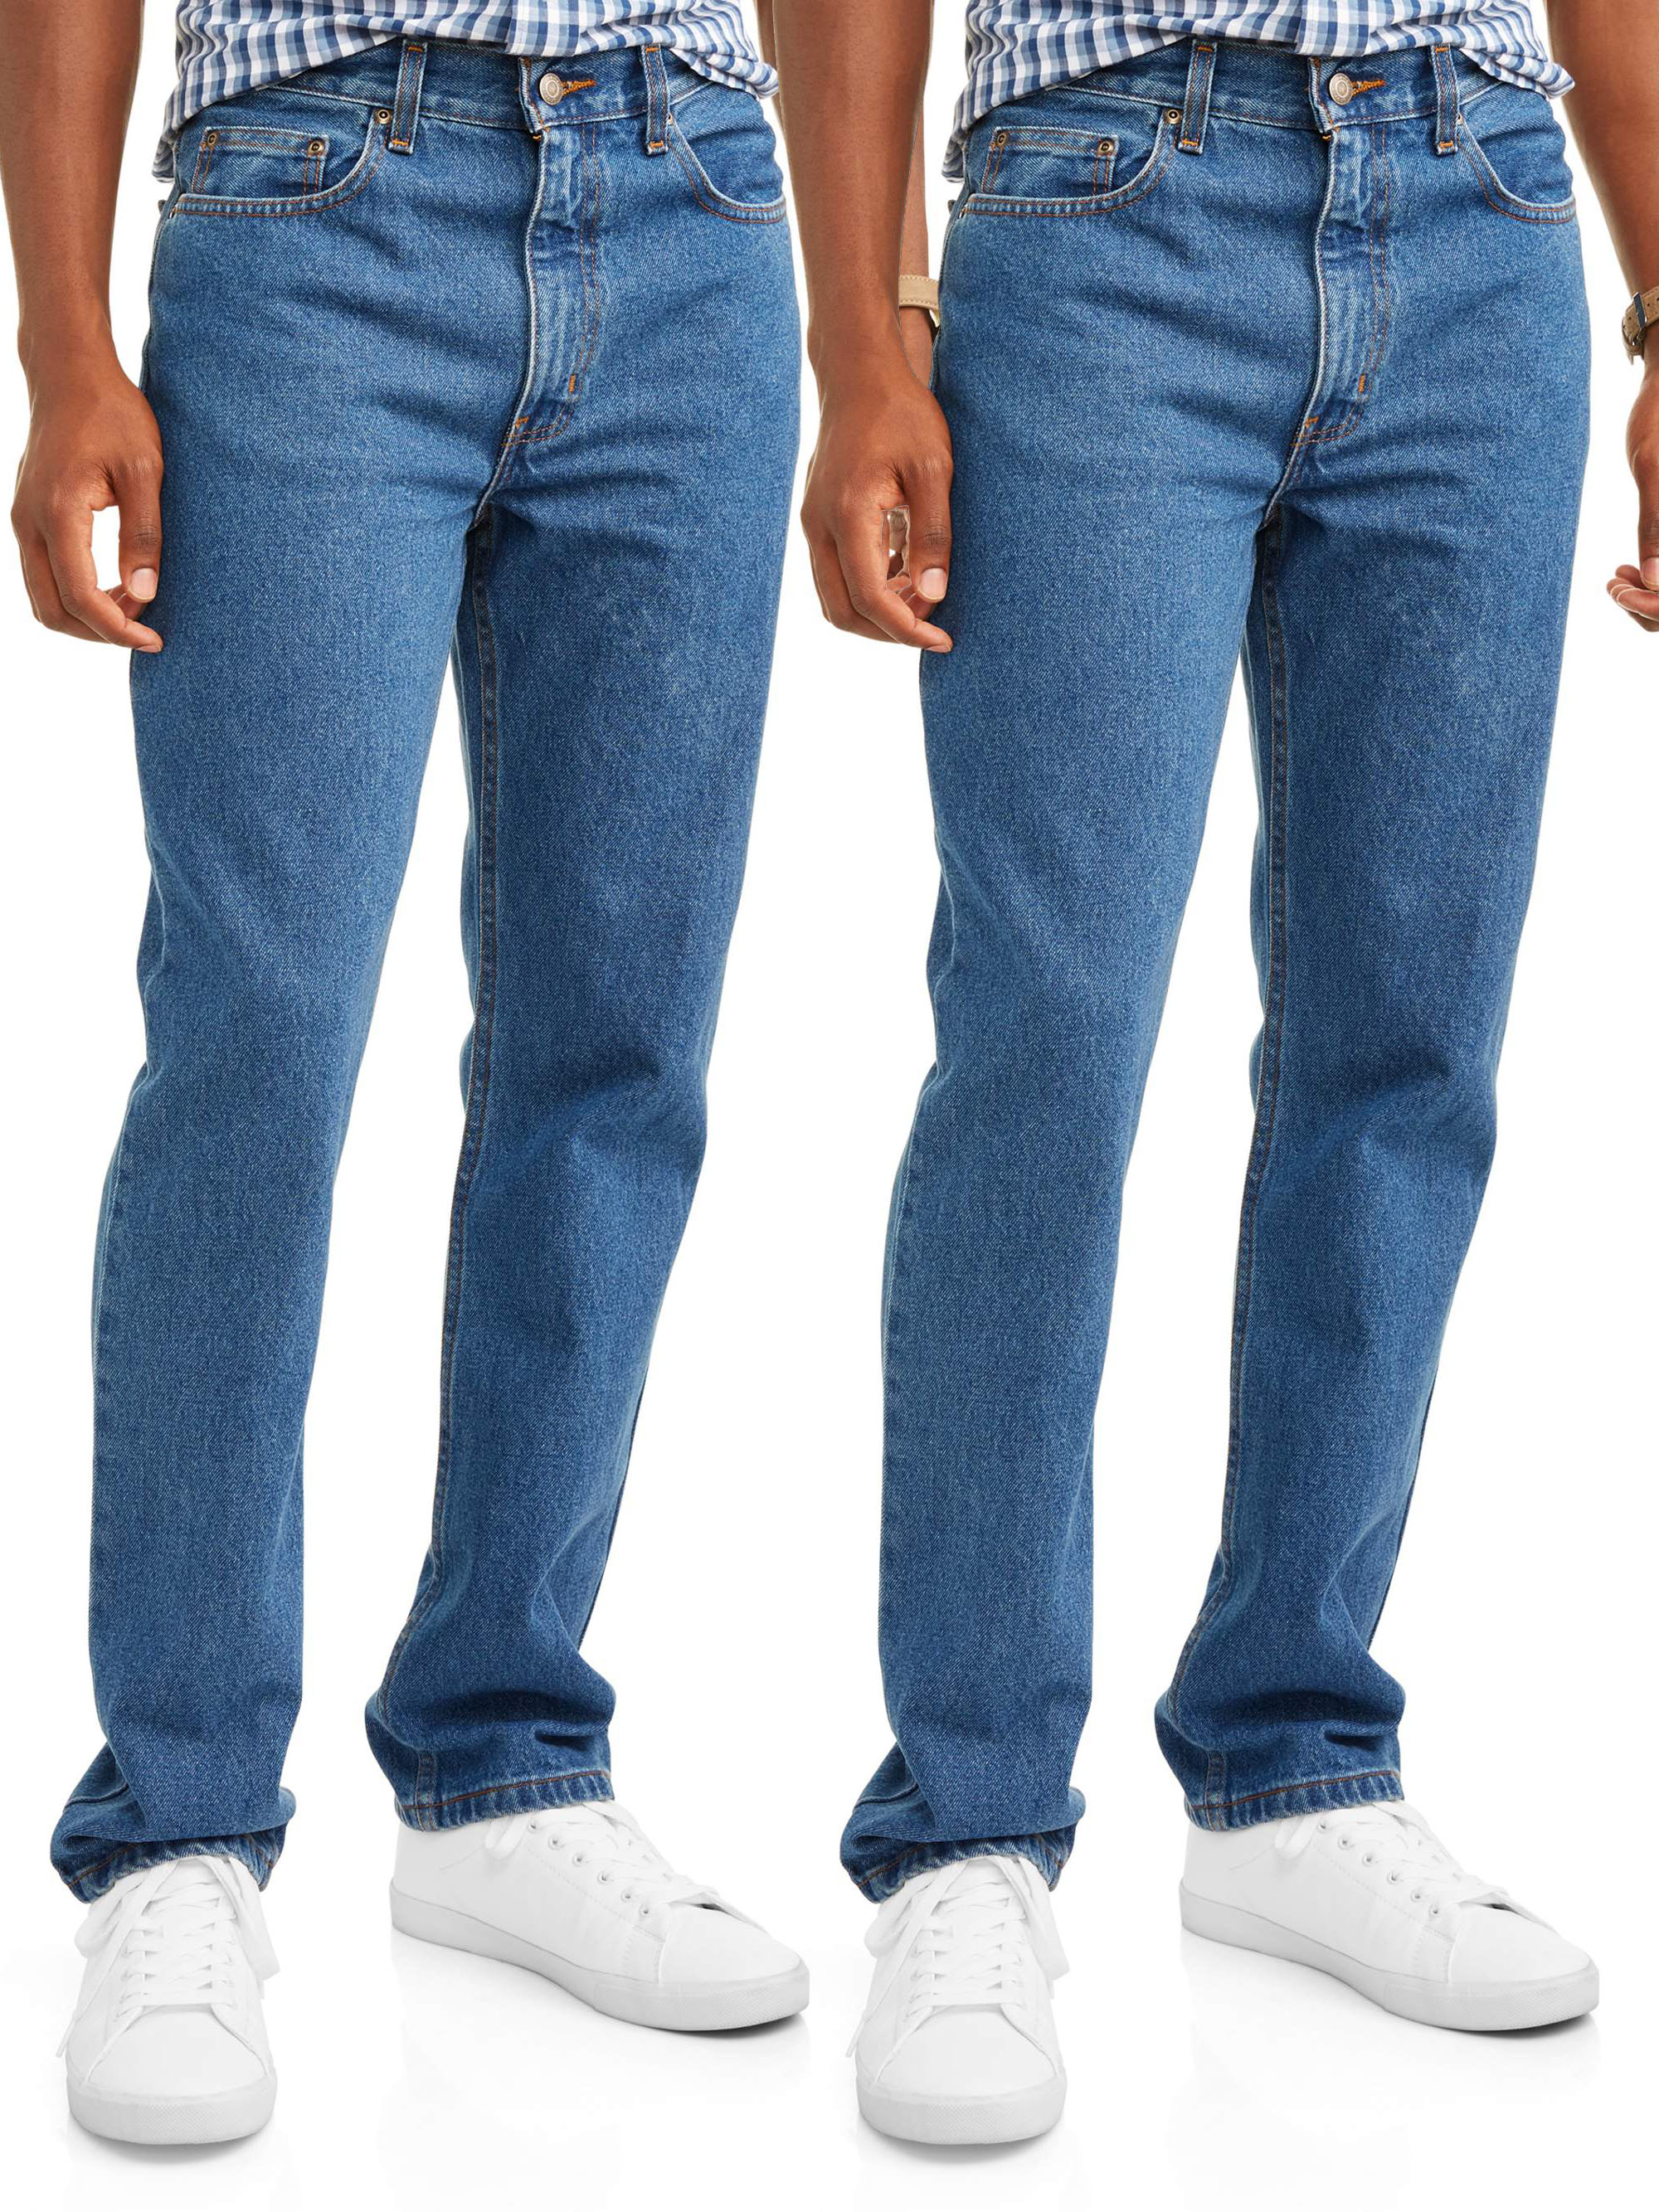 George Men's 100% Cotton Regular Fit Jeans, 2-Pack - image 1 of 7